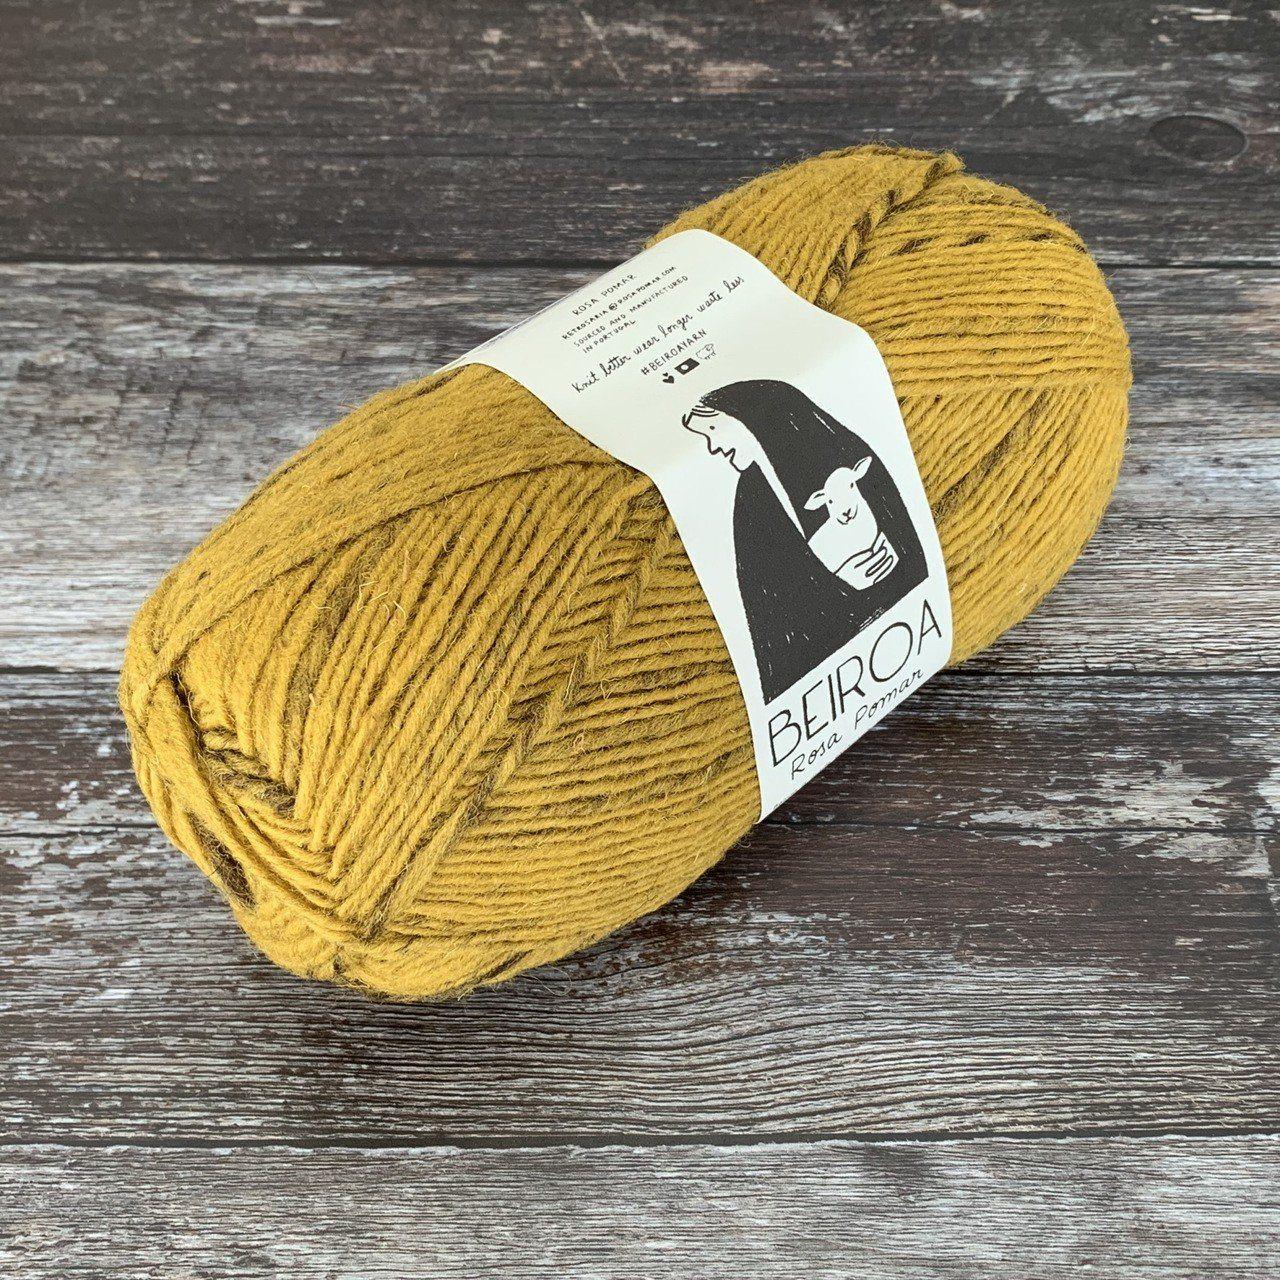 Retrosaria Retrosaria Beiroa - 573 - Worsted Knitting Yarn